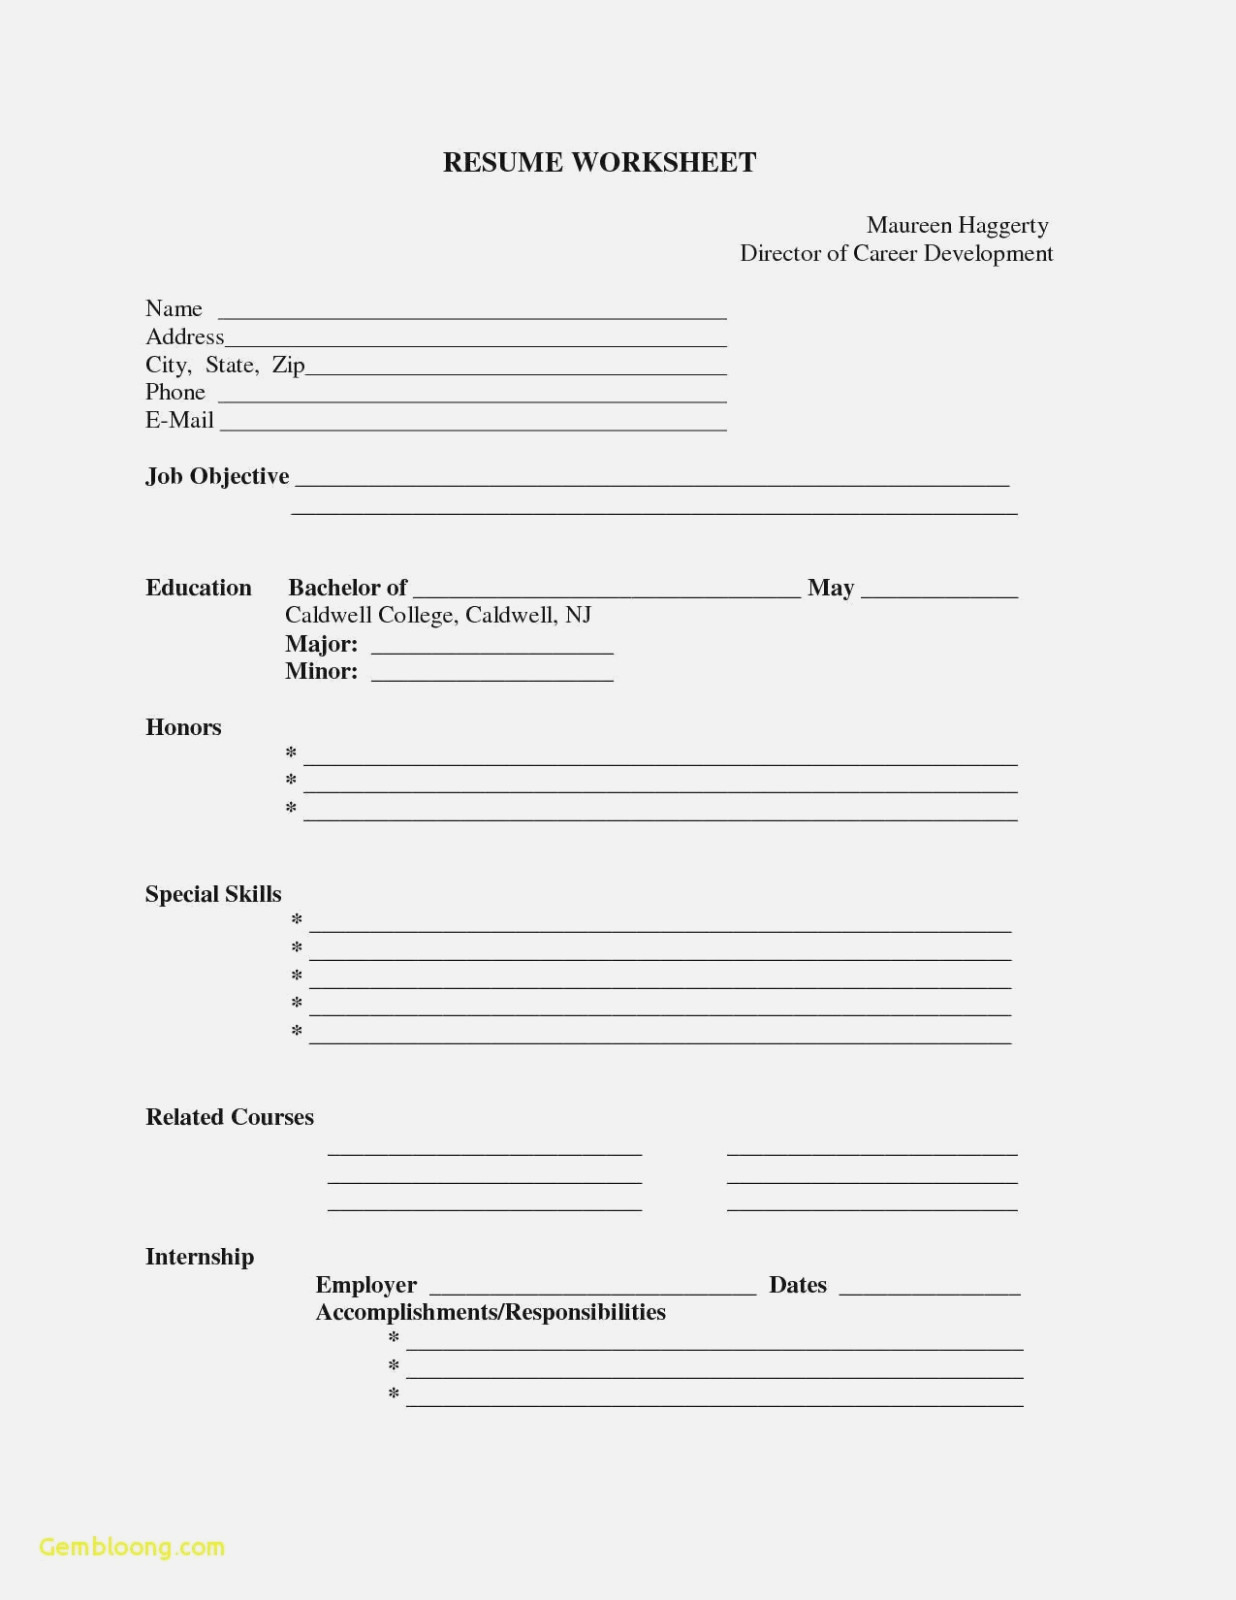 Resume Worksheet For High School Students Free Worksheets